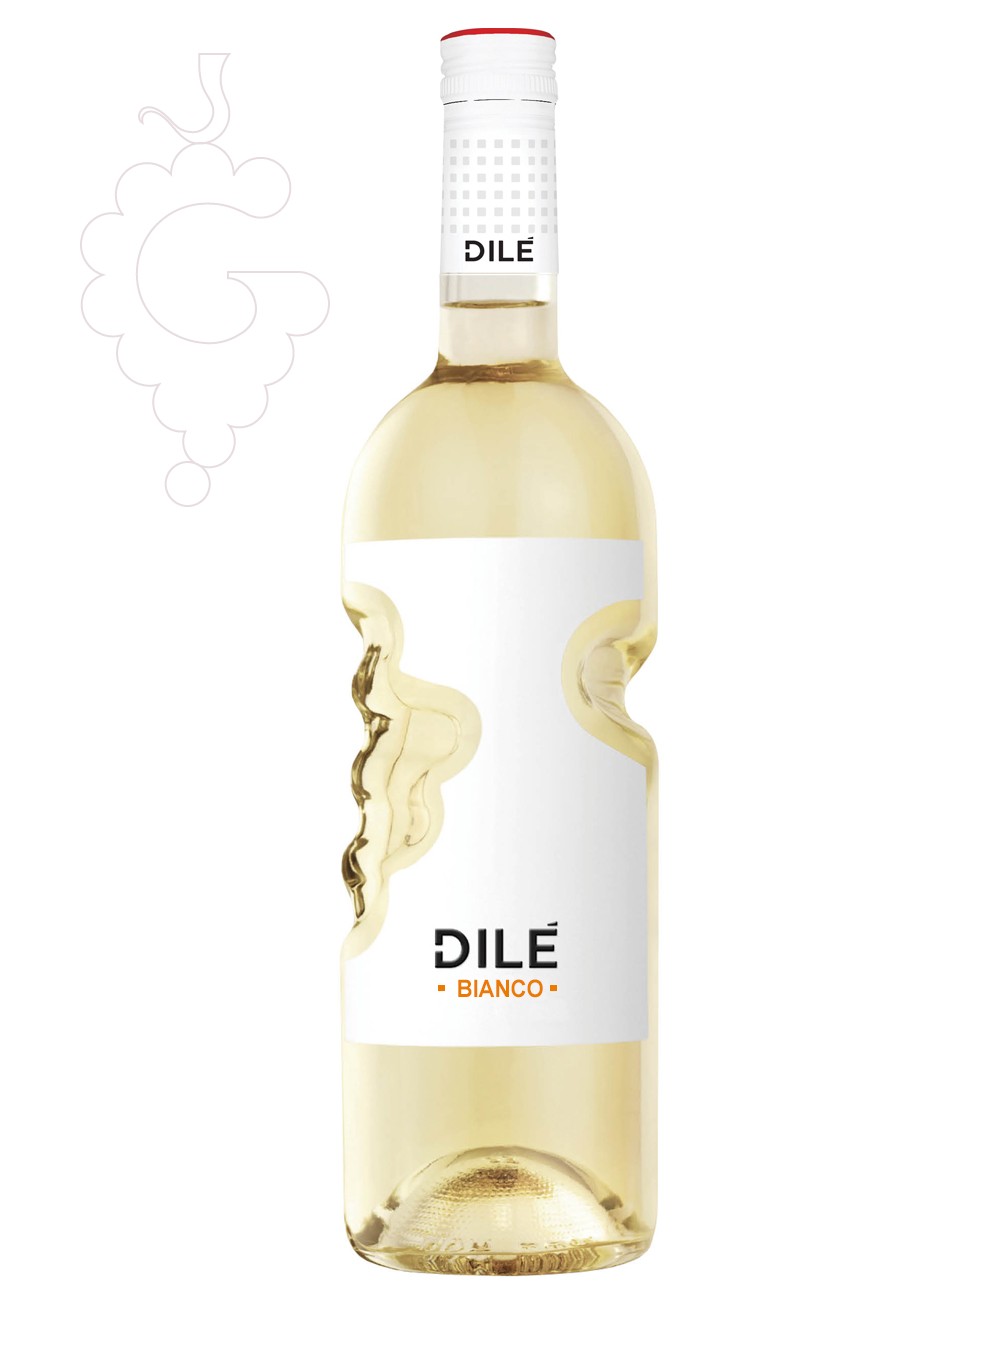 Photo Dilé Bianco white wine